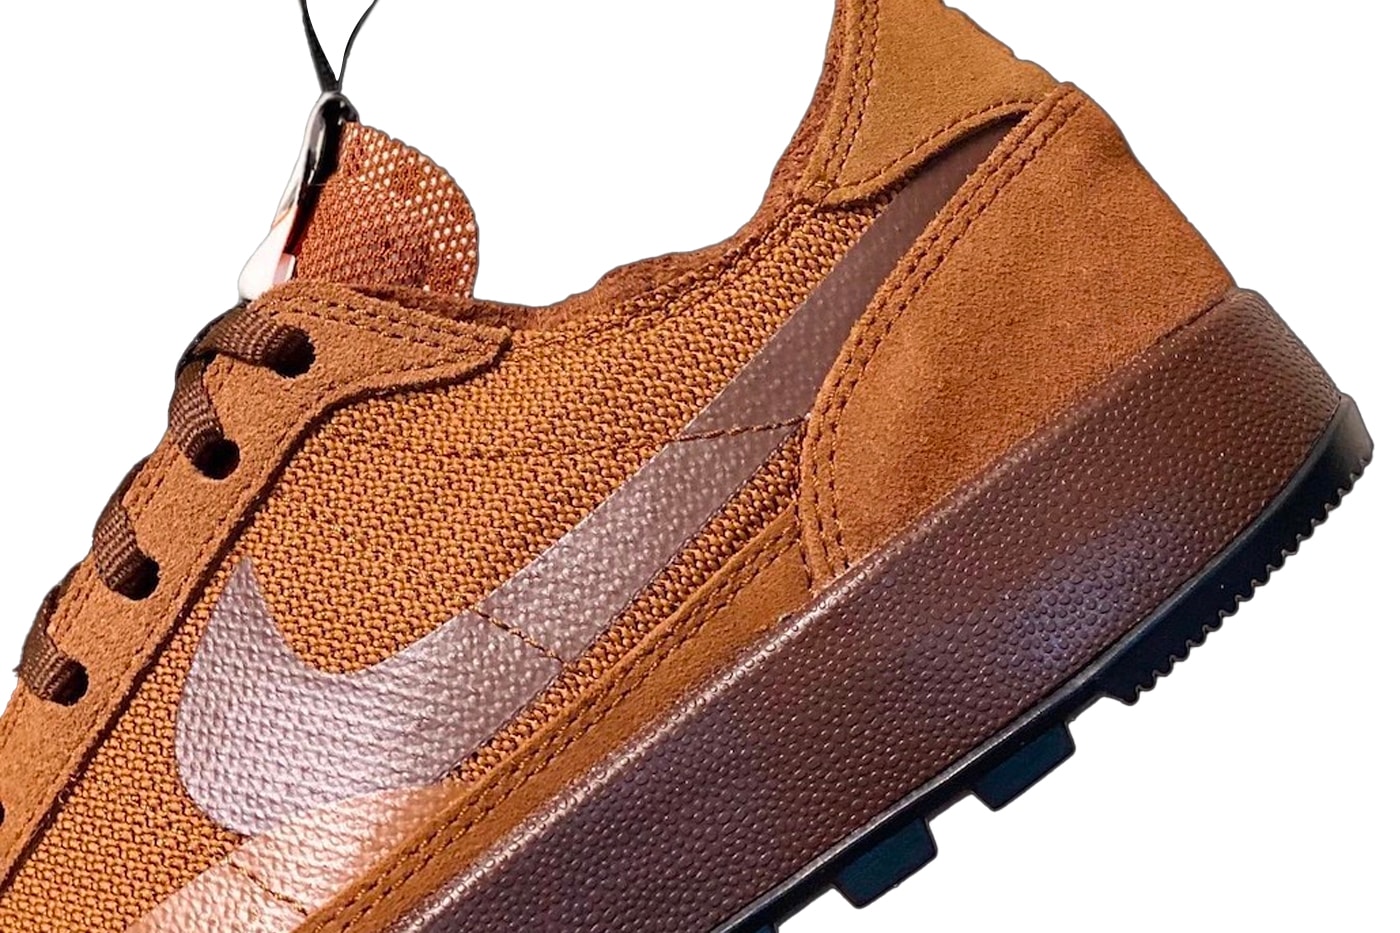 Tom Sachs NikeCraft General Purpose Shoe Brown First Look Release Info DA6672-201 Date Buy Price 